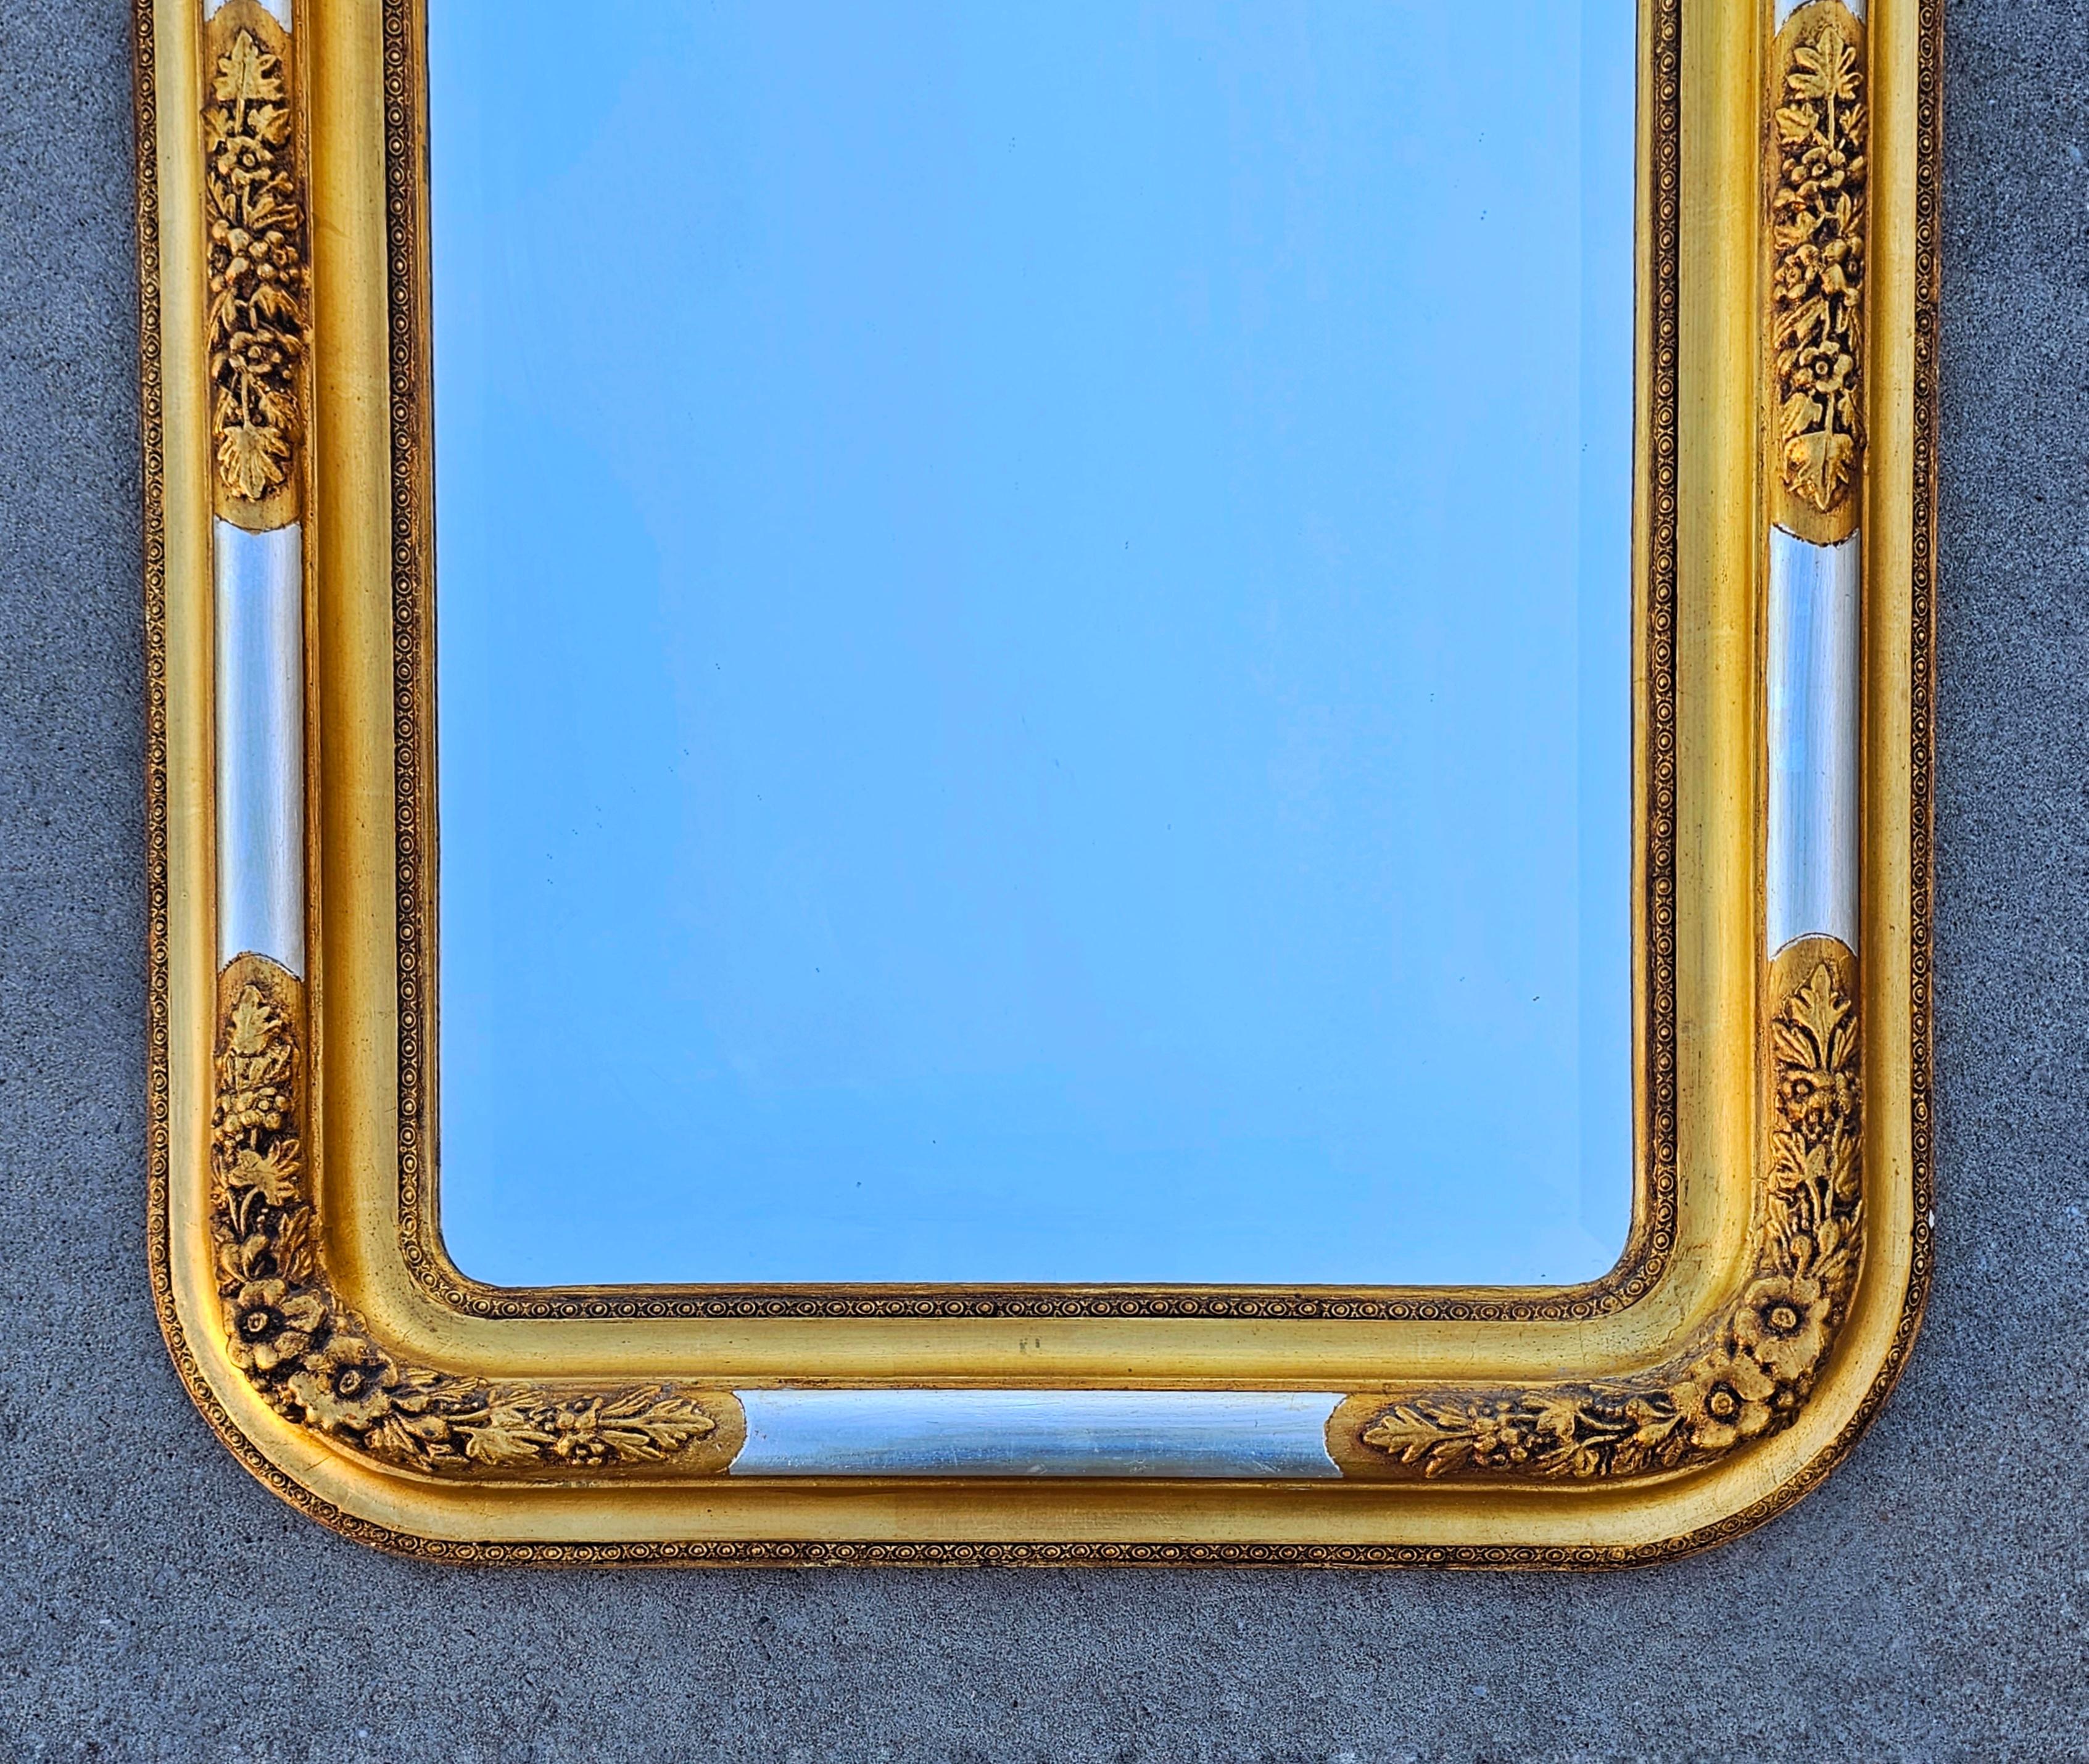 Gilt Large and rare Biedermeier Gold Plated Mirror, Austria cca. 1840s